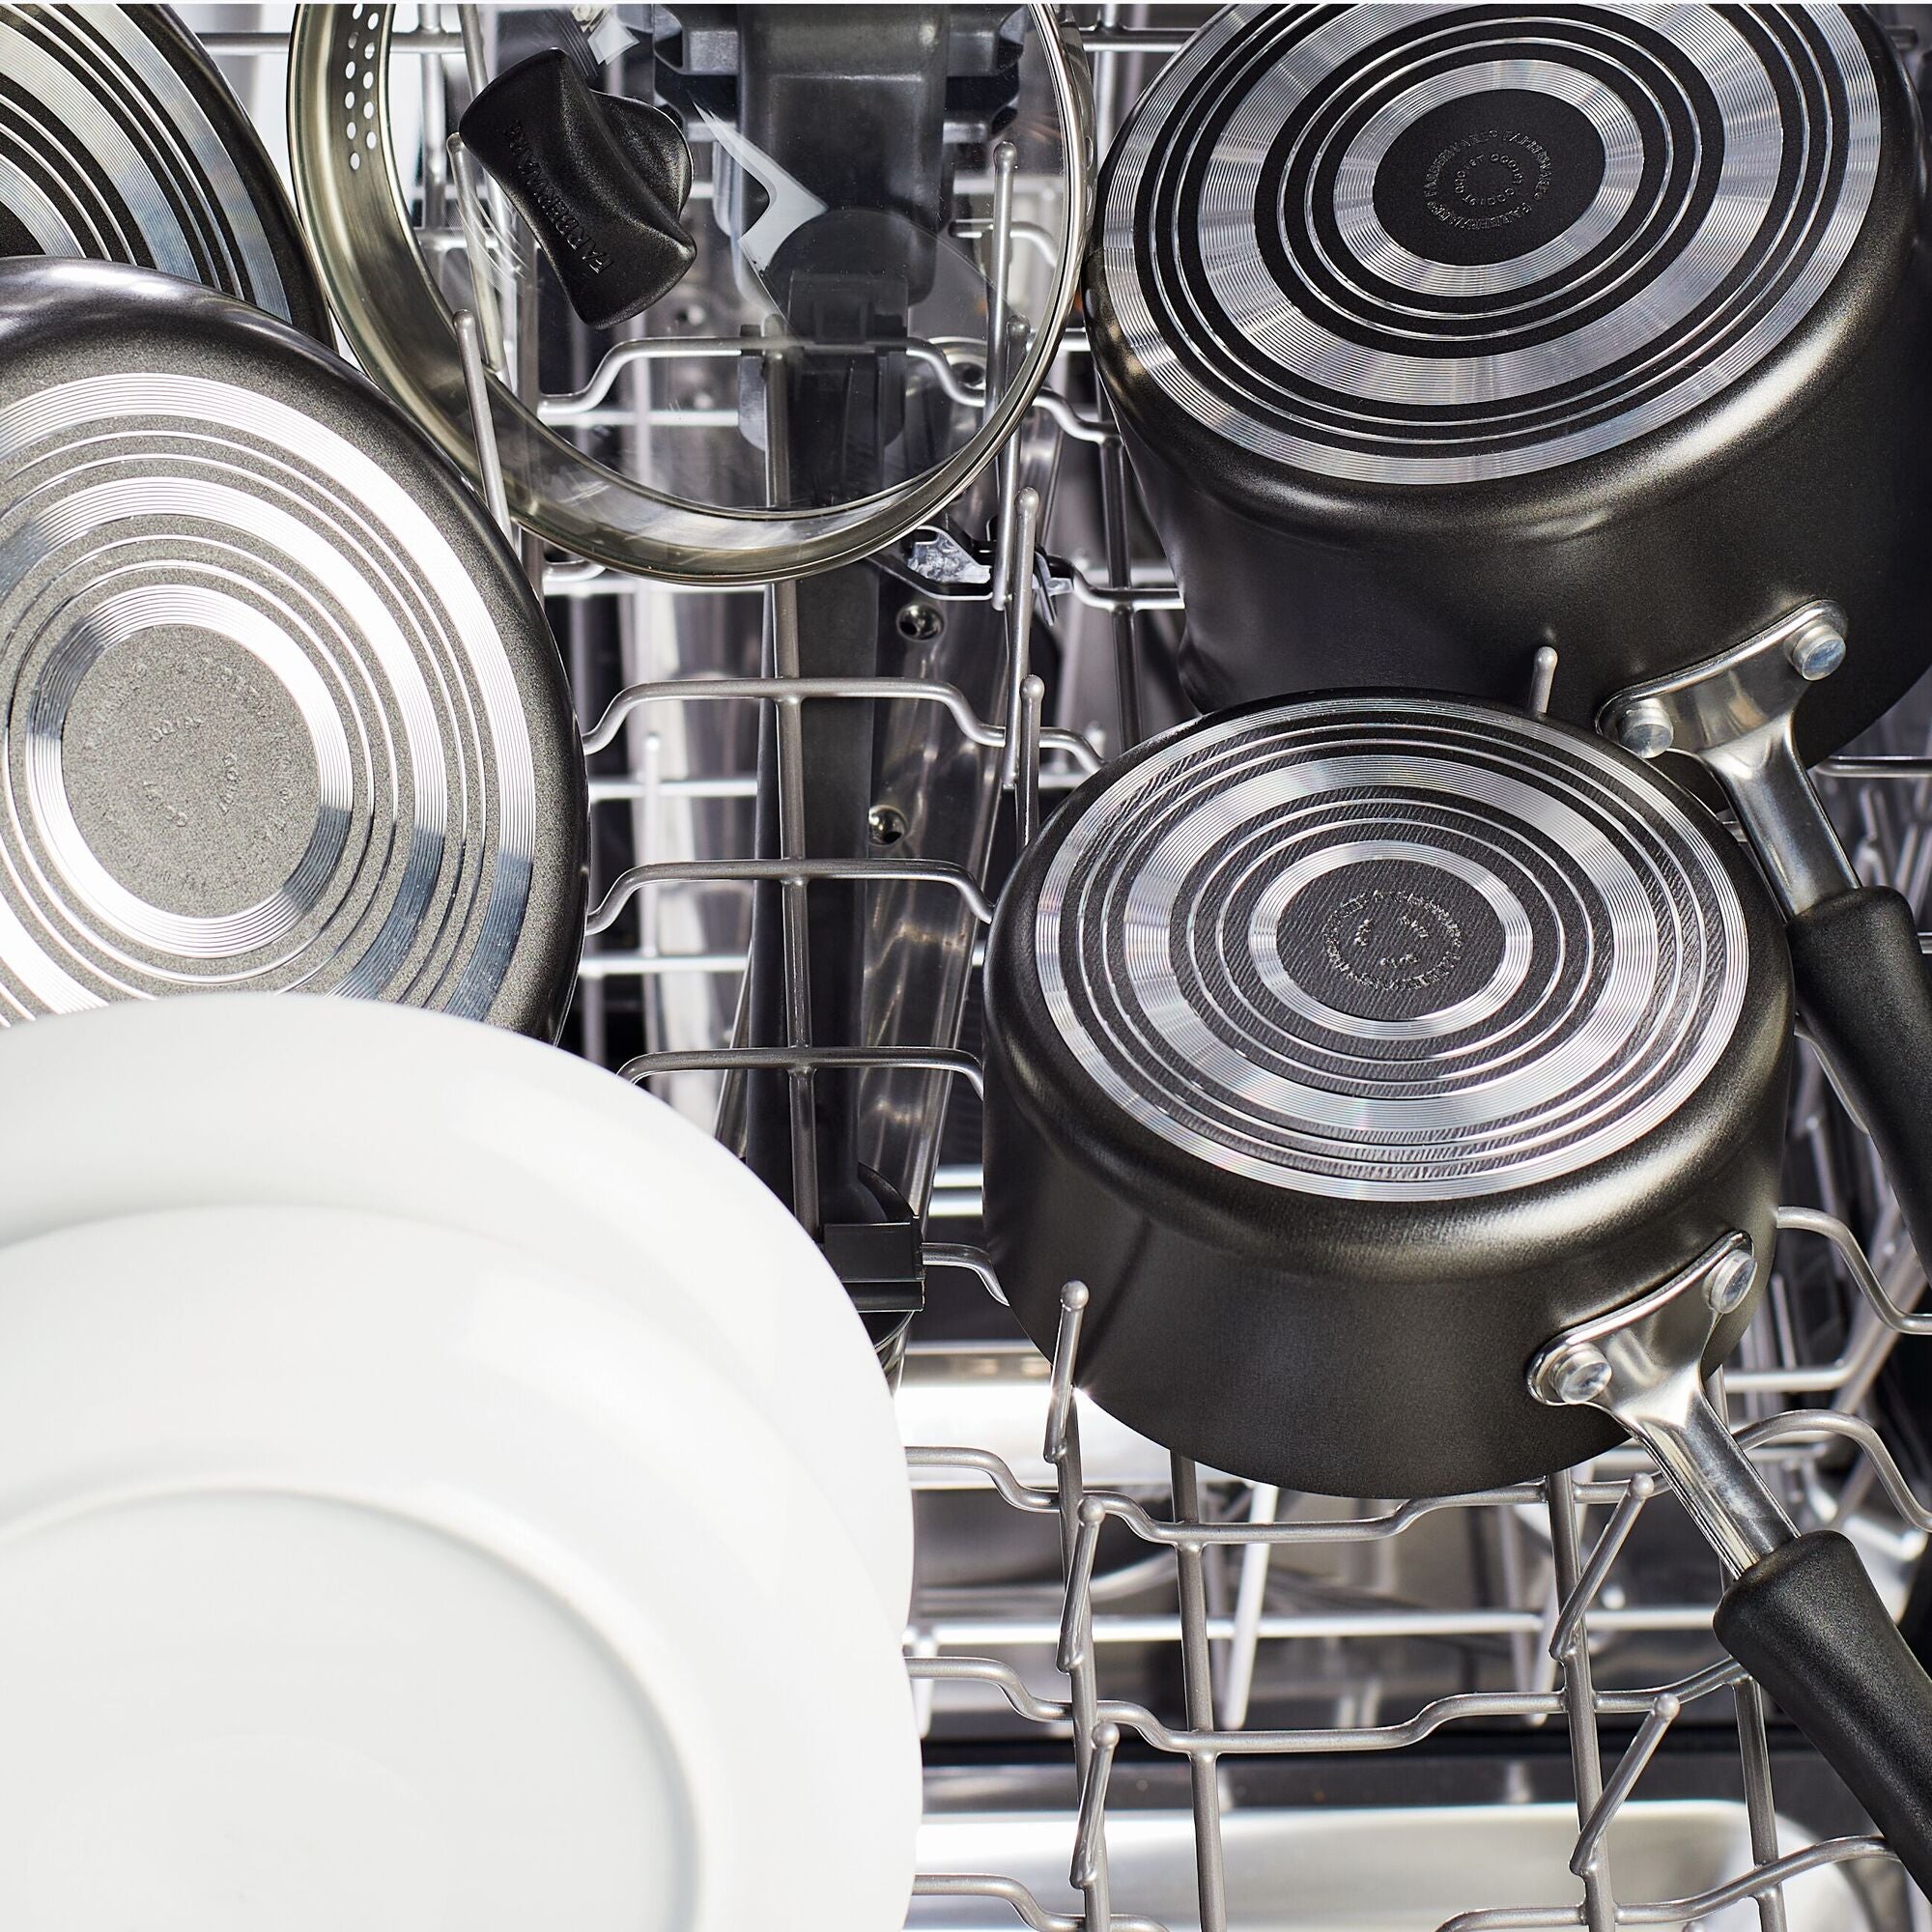 3-Piece Nonstick Frying Pan Set — Farberware Cookware